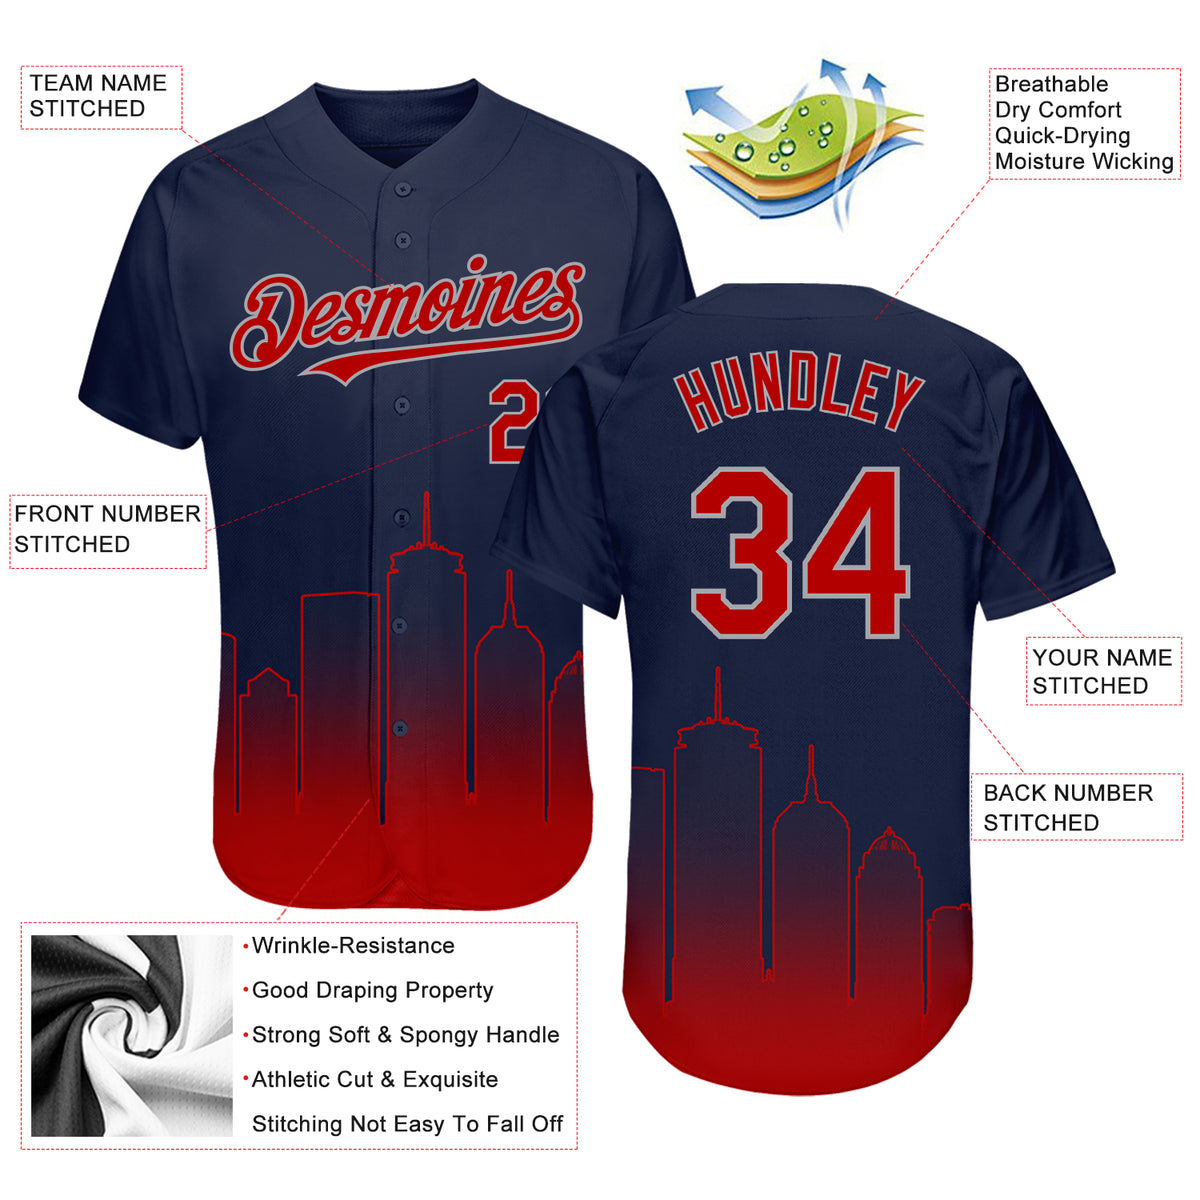 Boston Red Sox MLB 3D Baseball Jersey Shirt For Men Women Personalized -  Freedomdesign